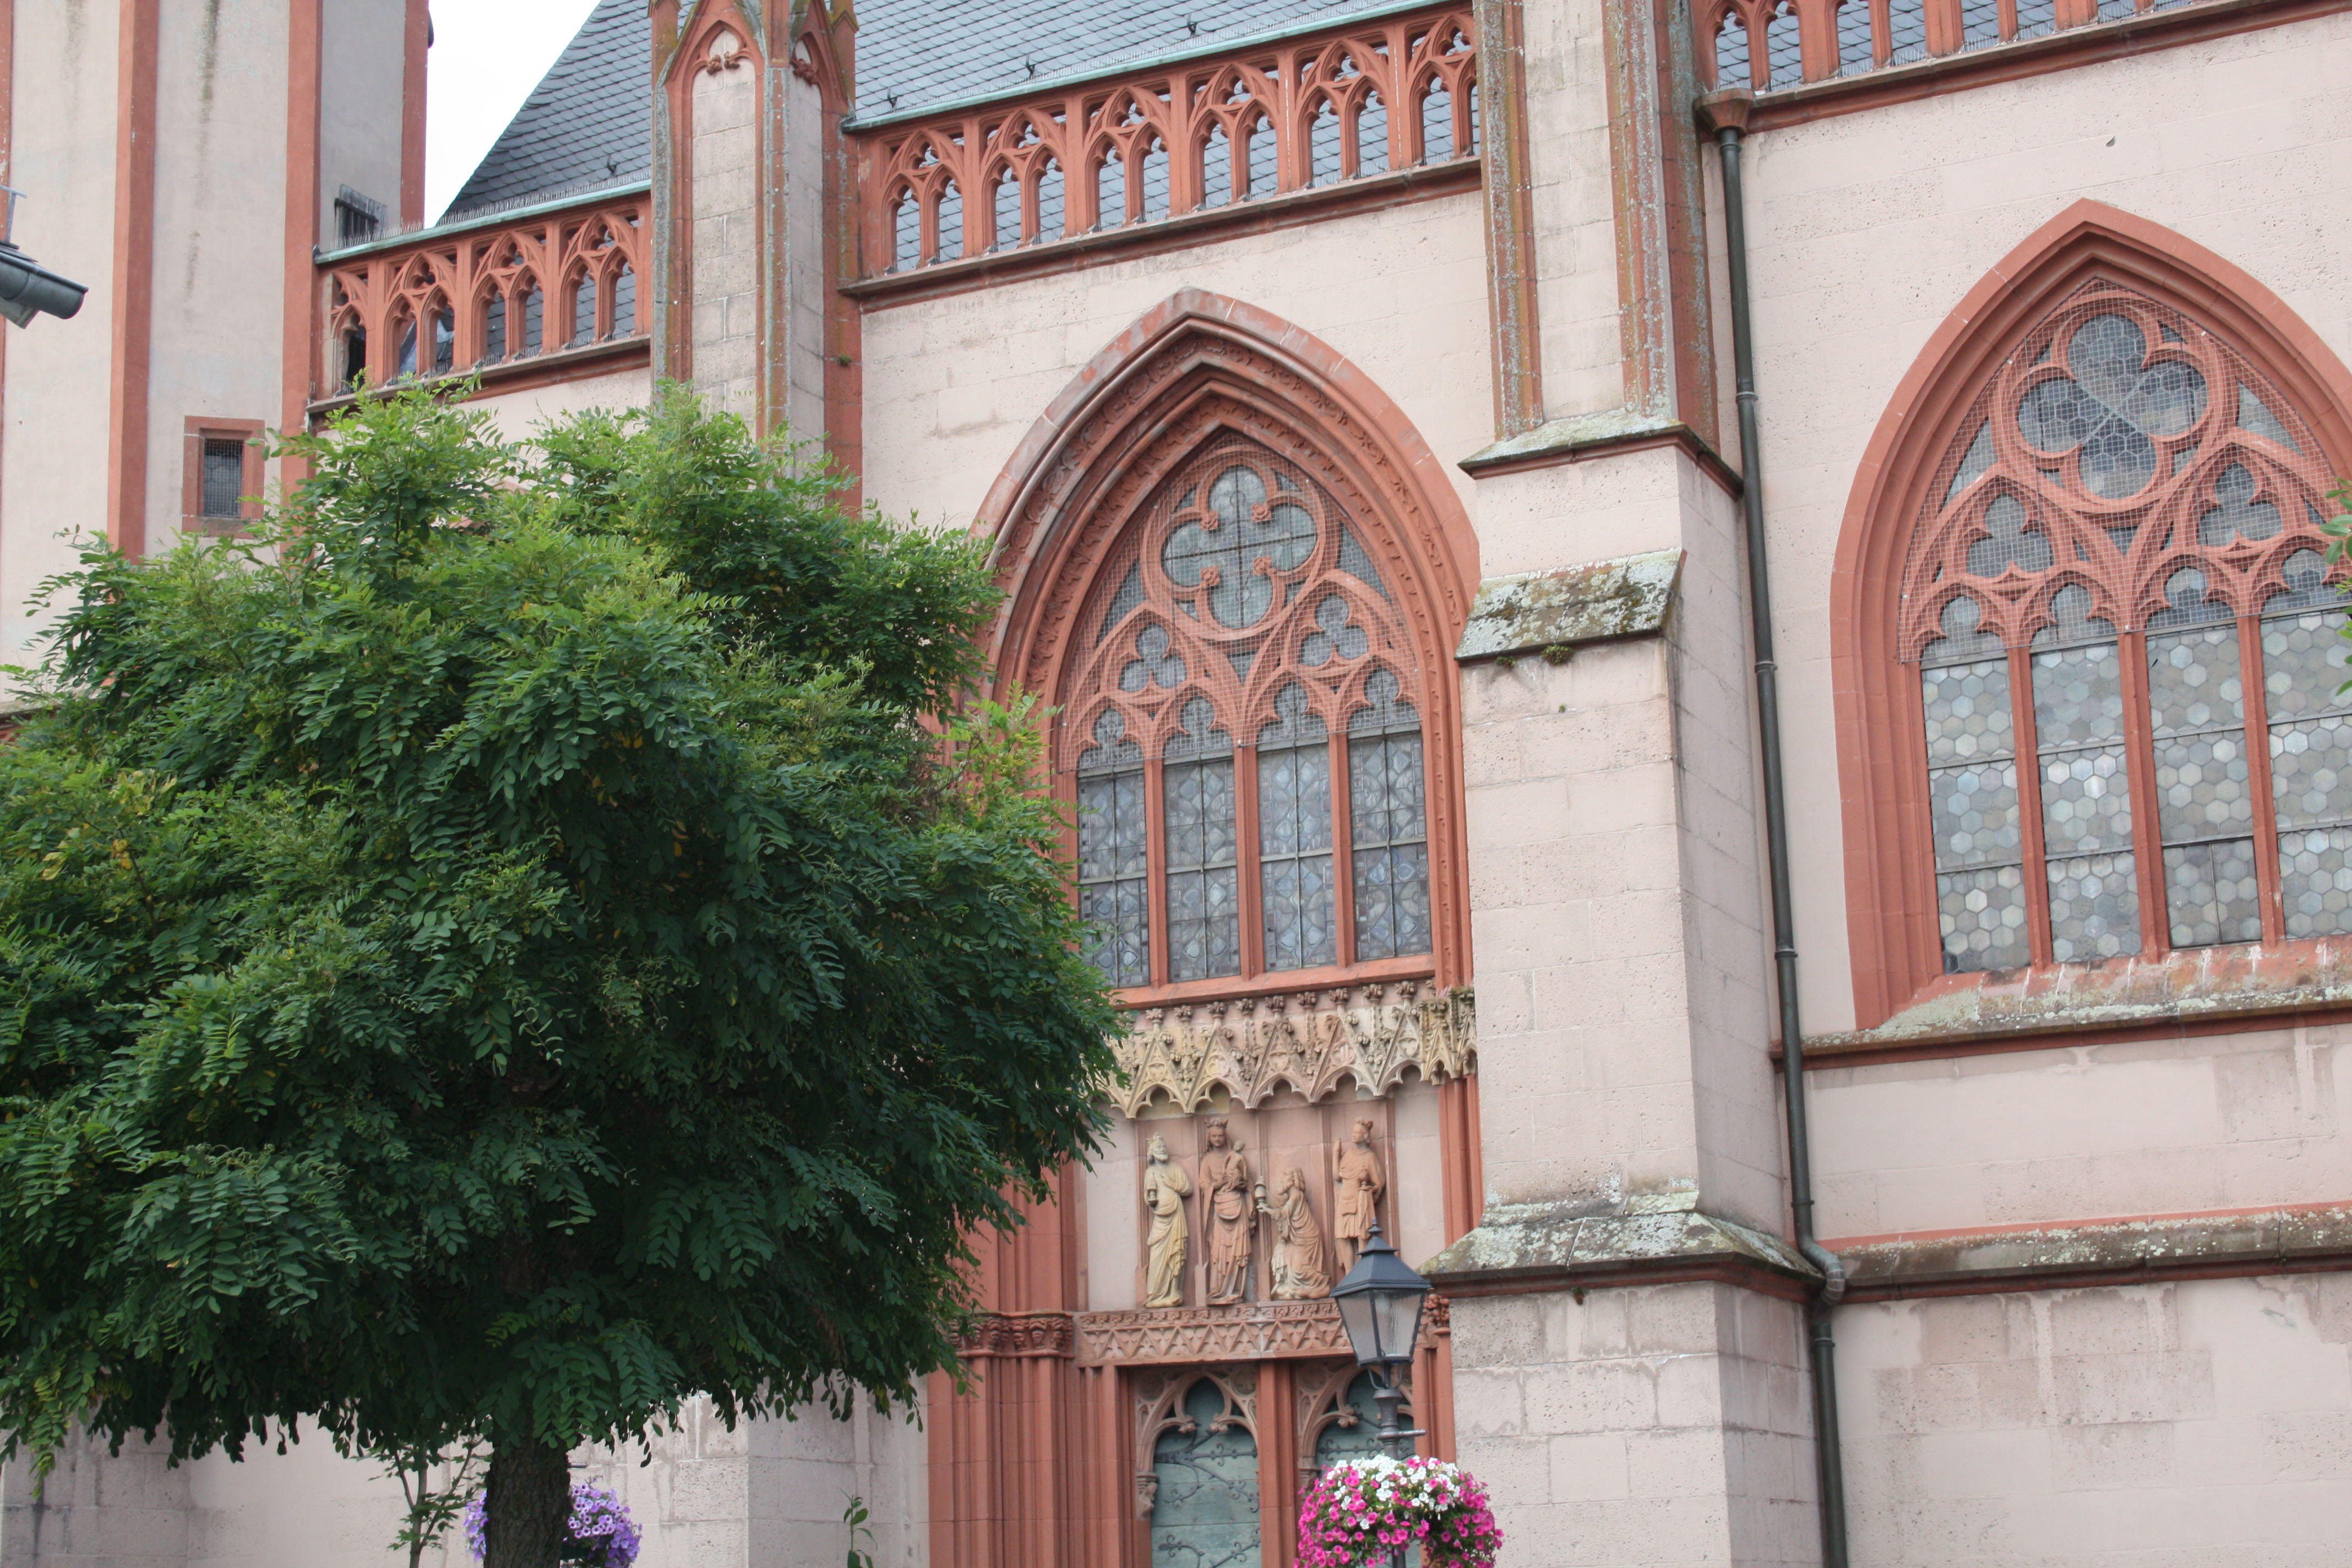 Eingangsportal der Liebfrauenkirche Schotten.
